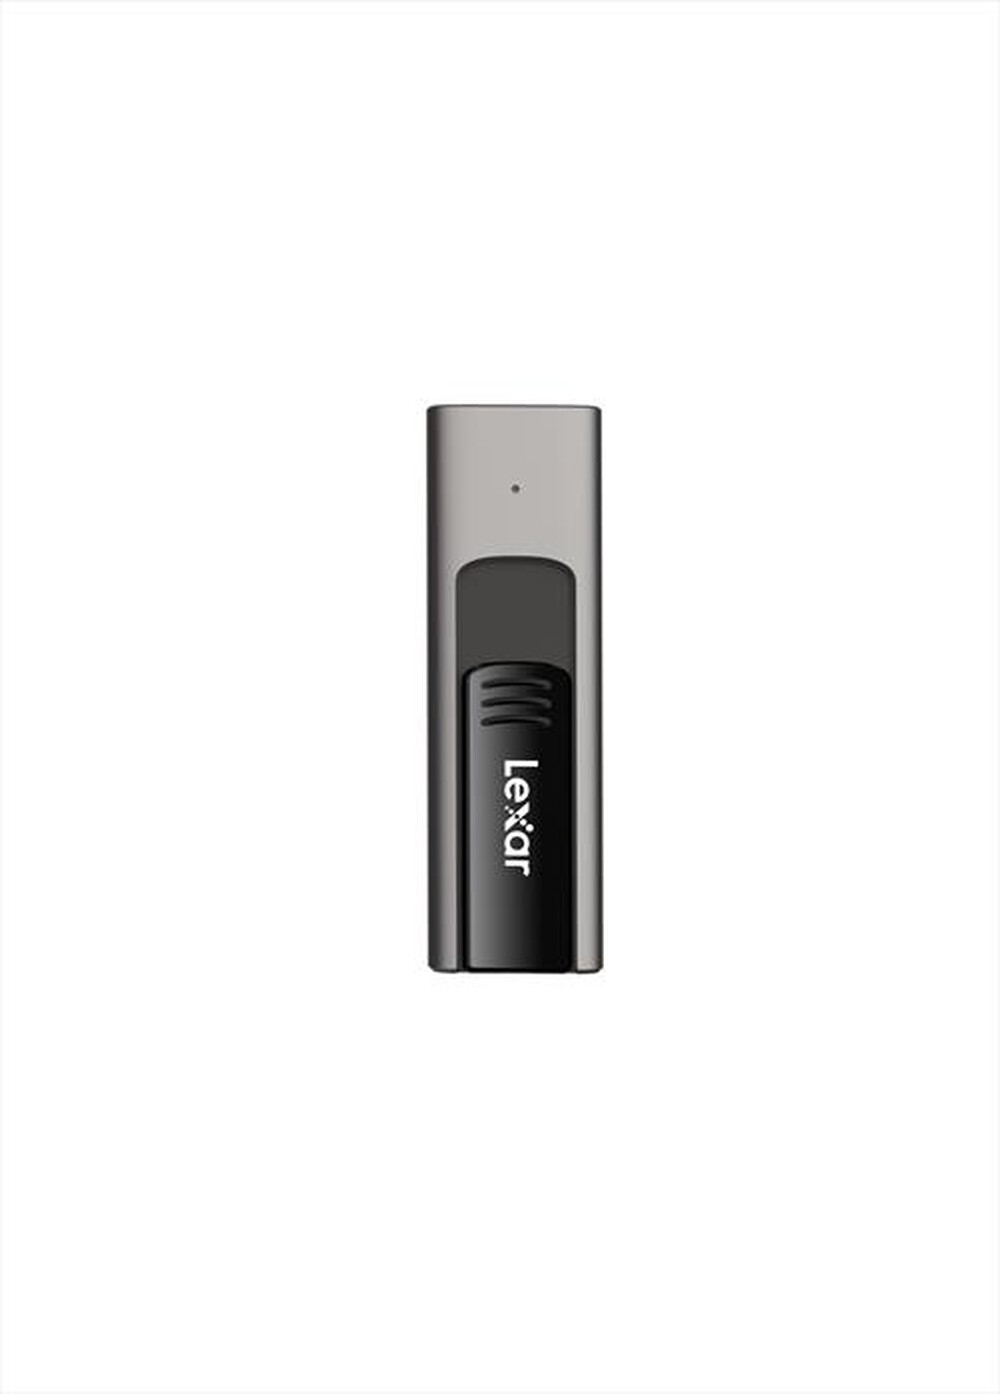 "LEXAR - JUMPDRIVE M900 USB 3.1 128GB-Grigio"